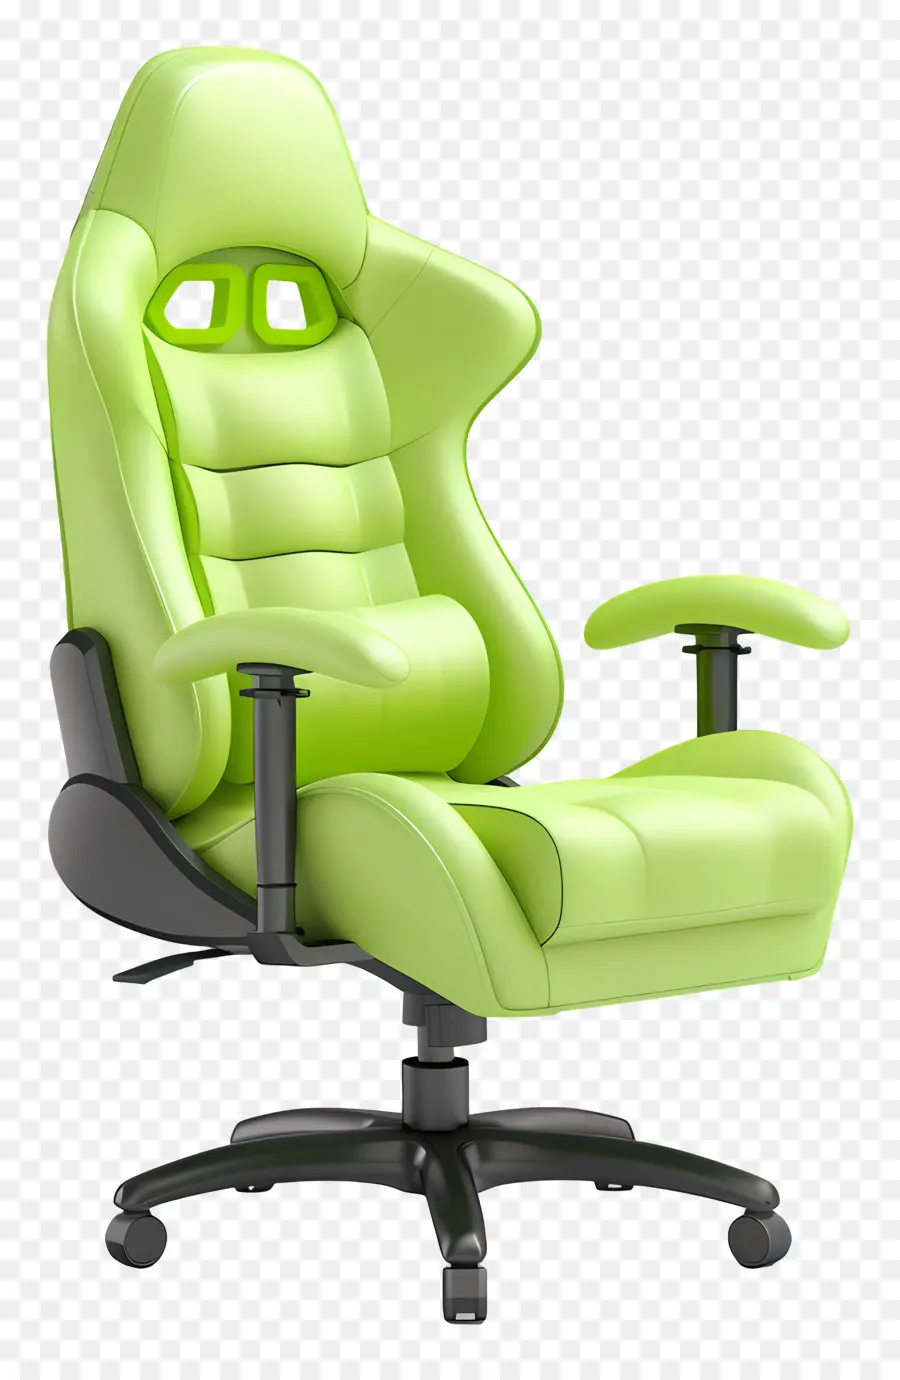 sedia da gioco sedia da gioco sedia verde sedile posti braccioli regolabili - Sedia da gioco verde con braccioli regolabili